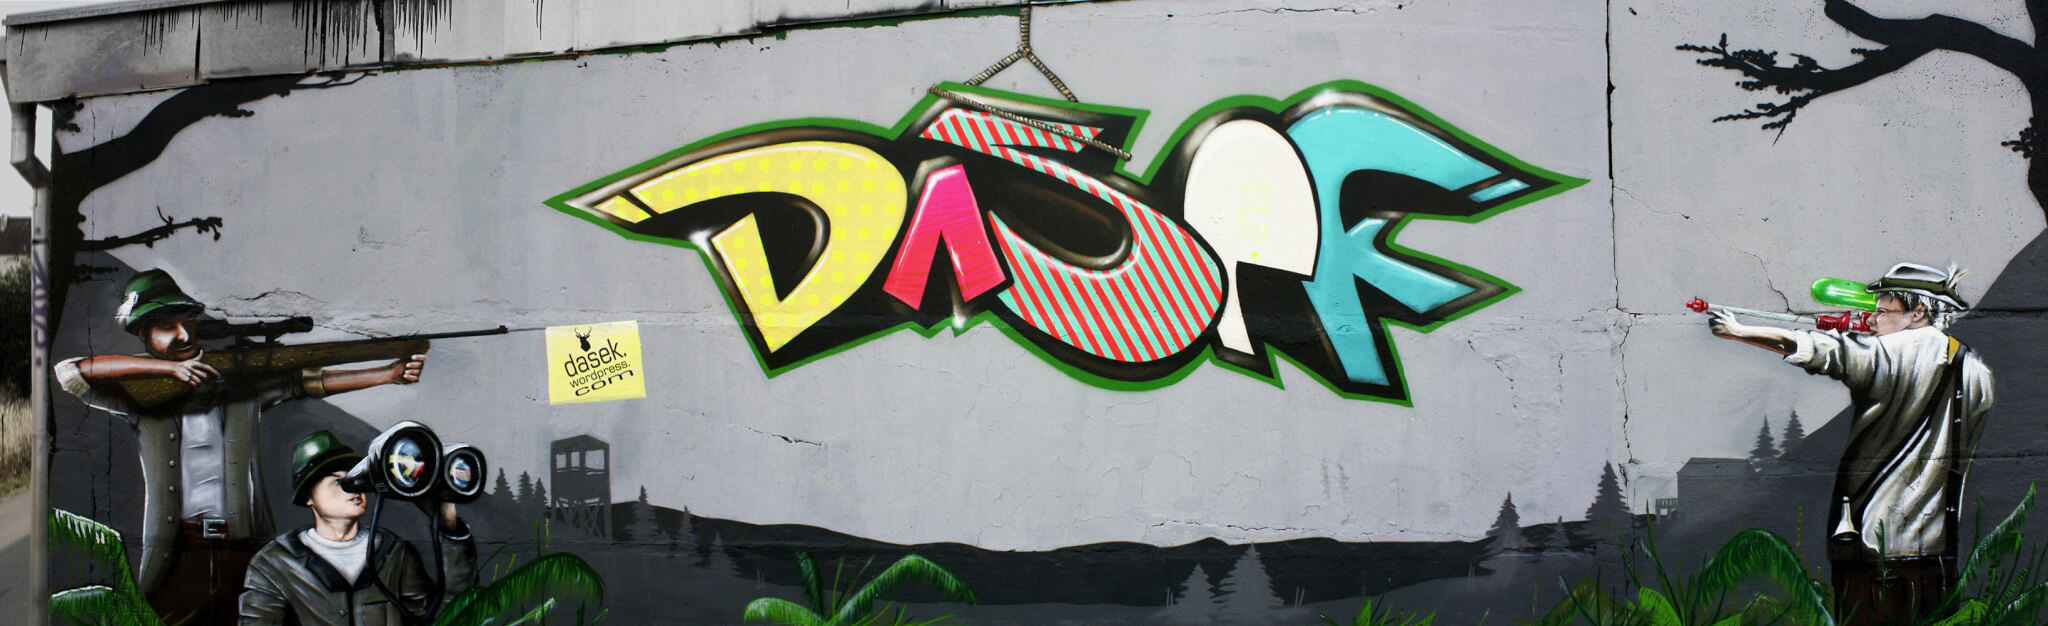 "Dasek" Graffiti Wall - Max Kosta, Krasty & Herr Haase 2008